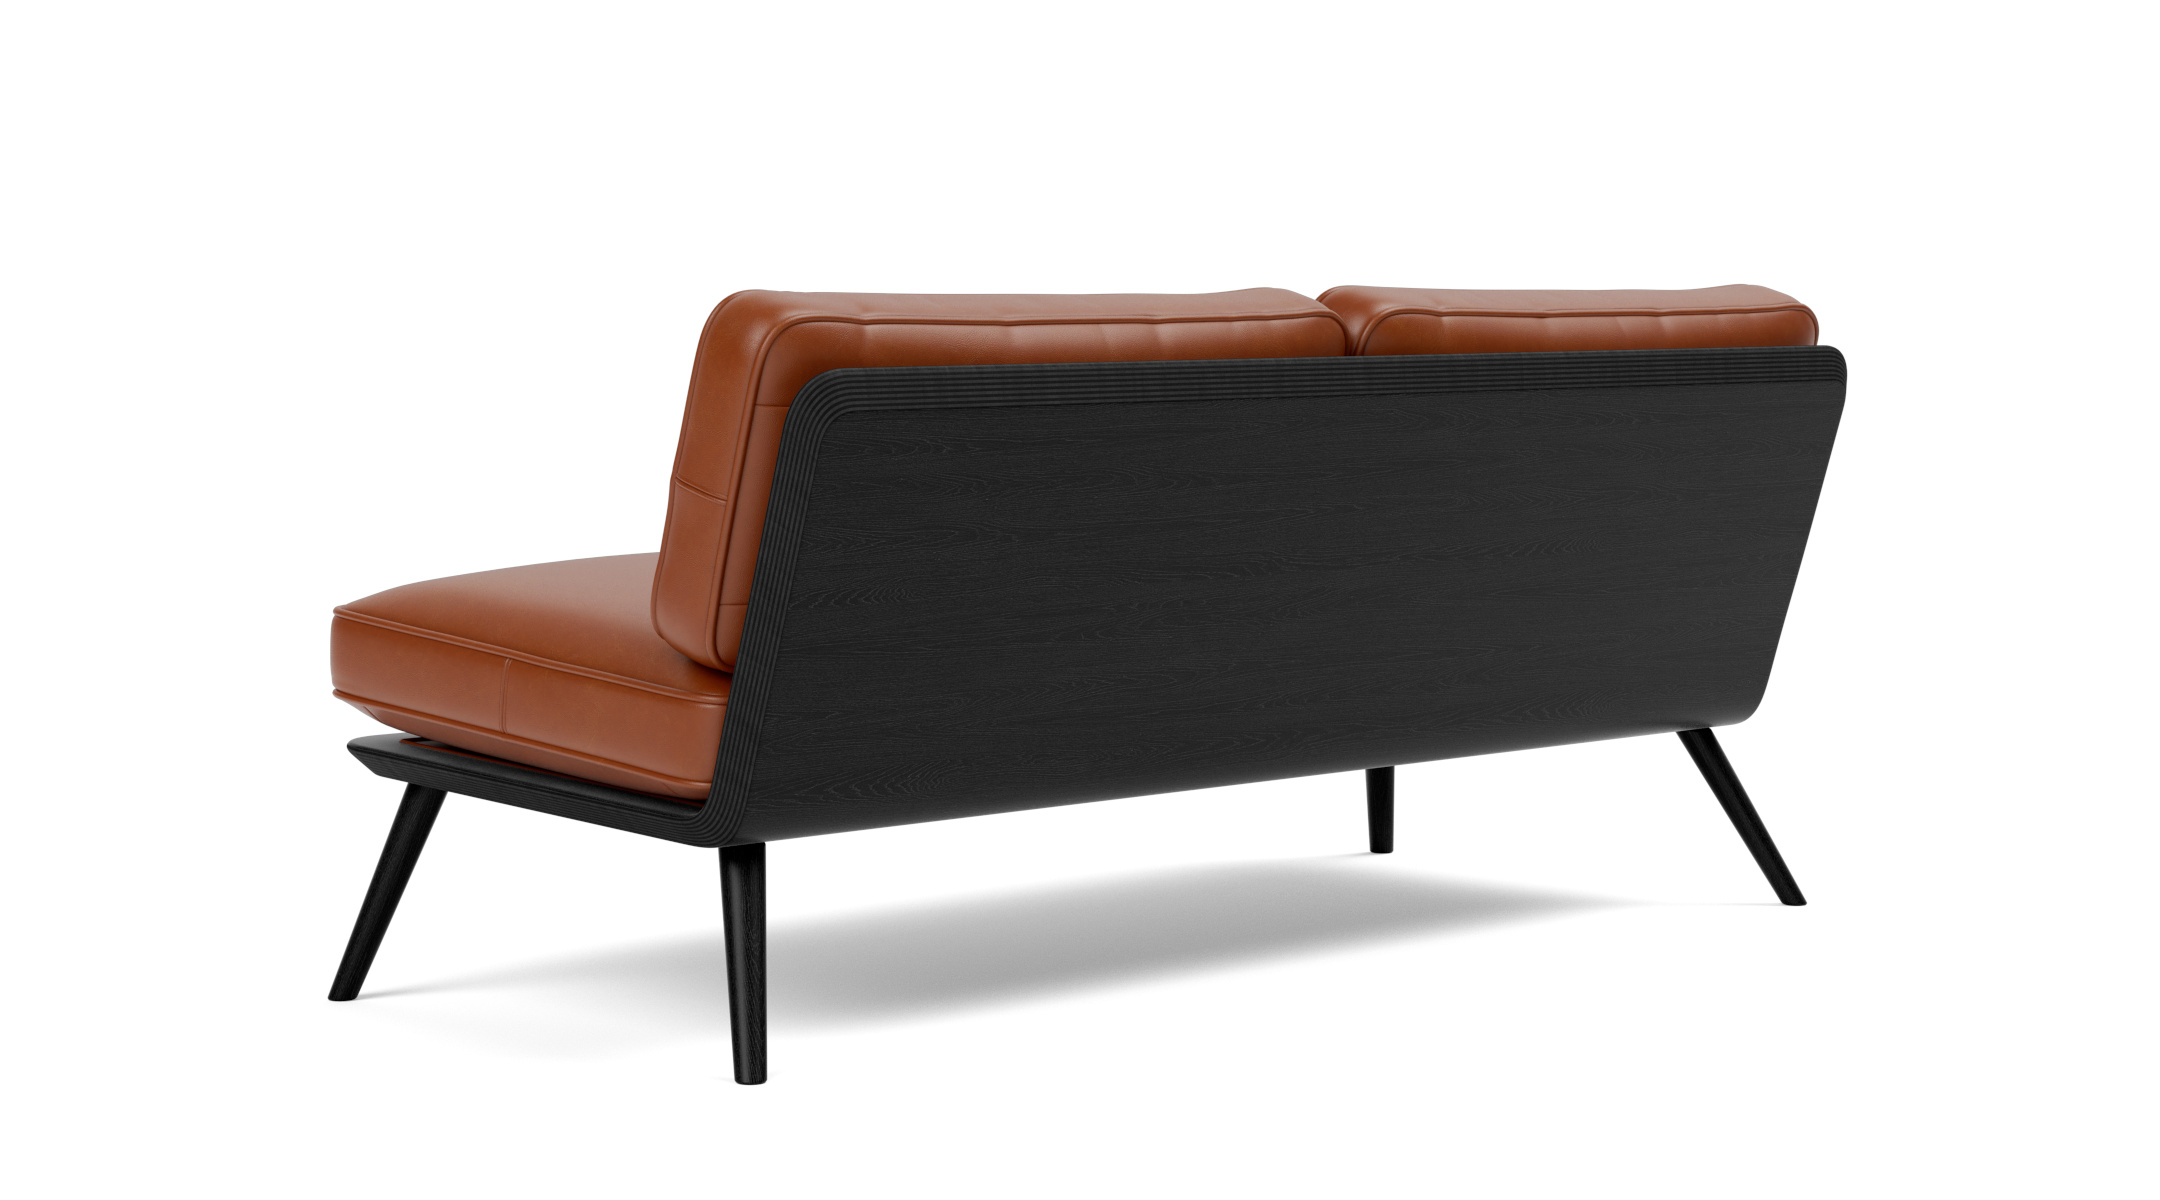 Spine Lounge Suite Sofa, esche schwarz / leder cera 905 russet brown